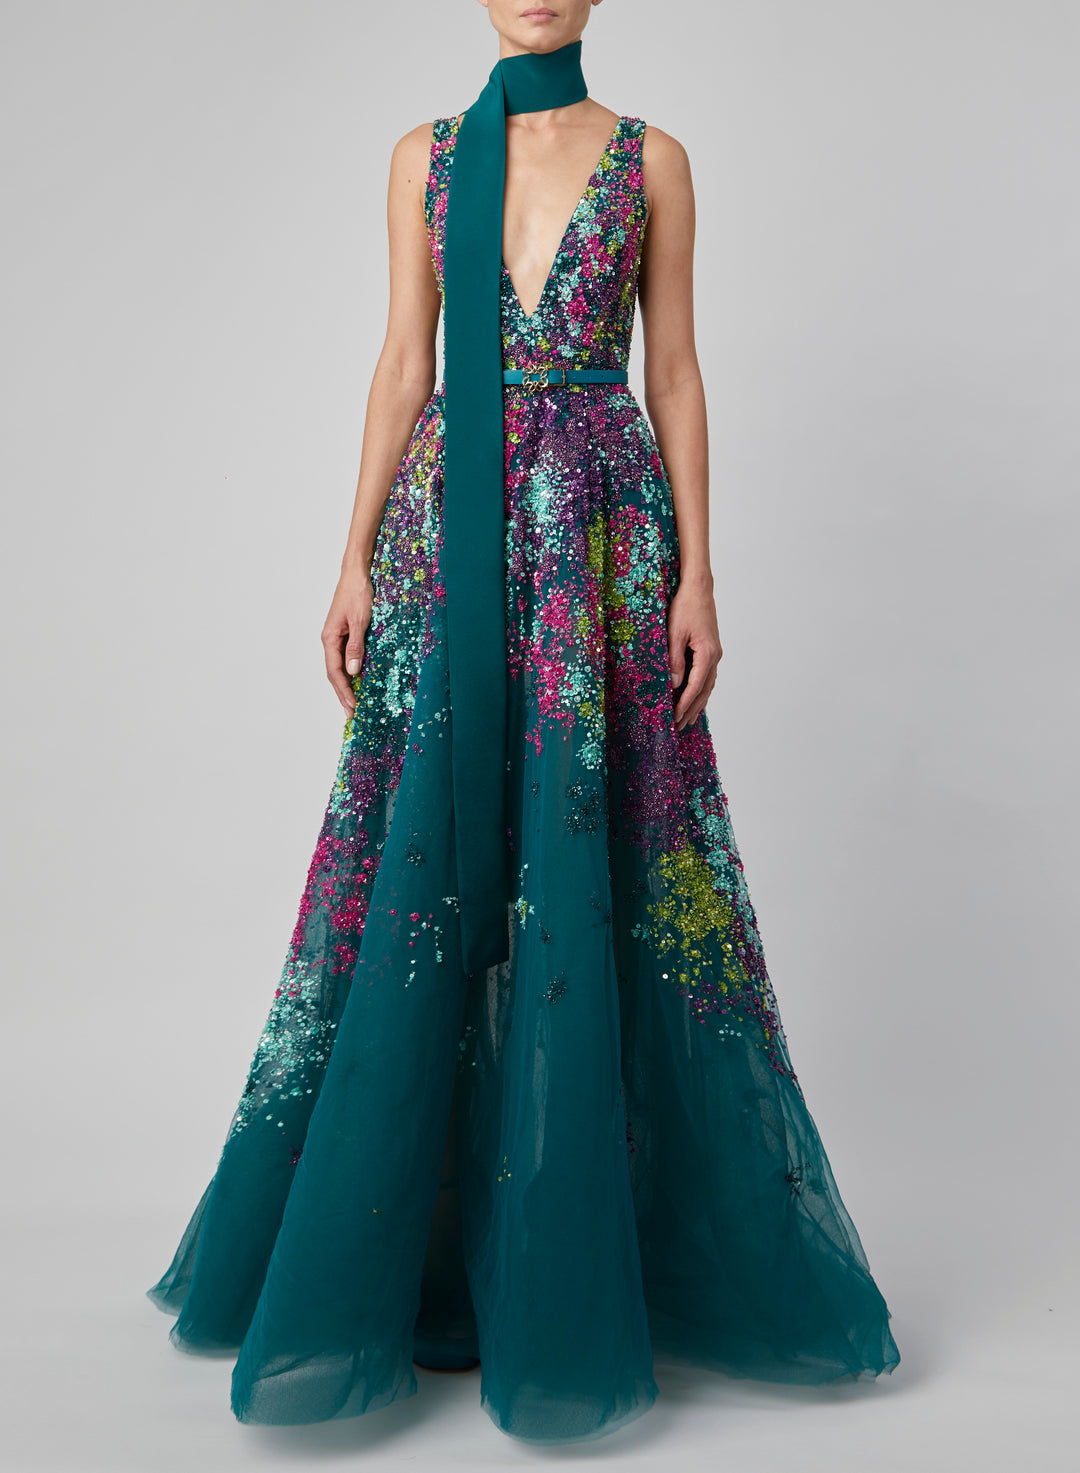 Designer Dresses | Luxury Dresses for Women – ELIE SAAB